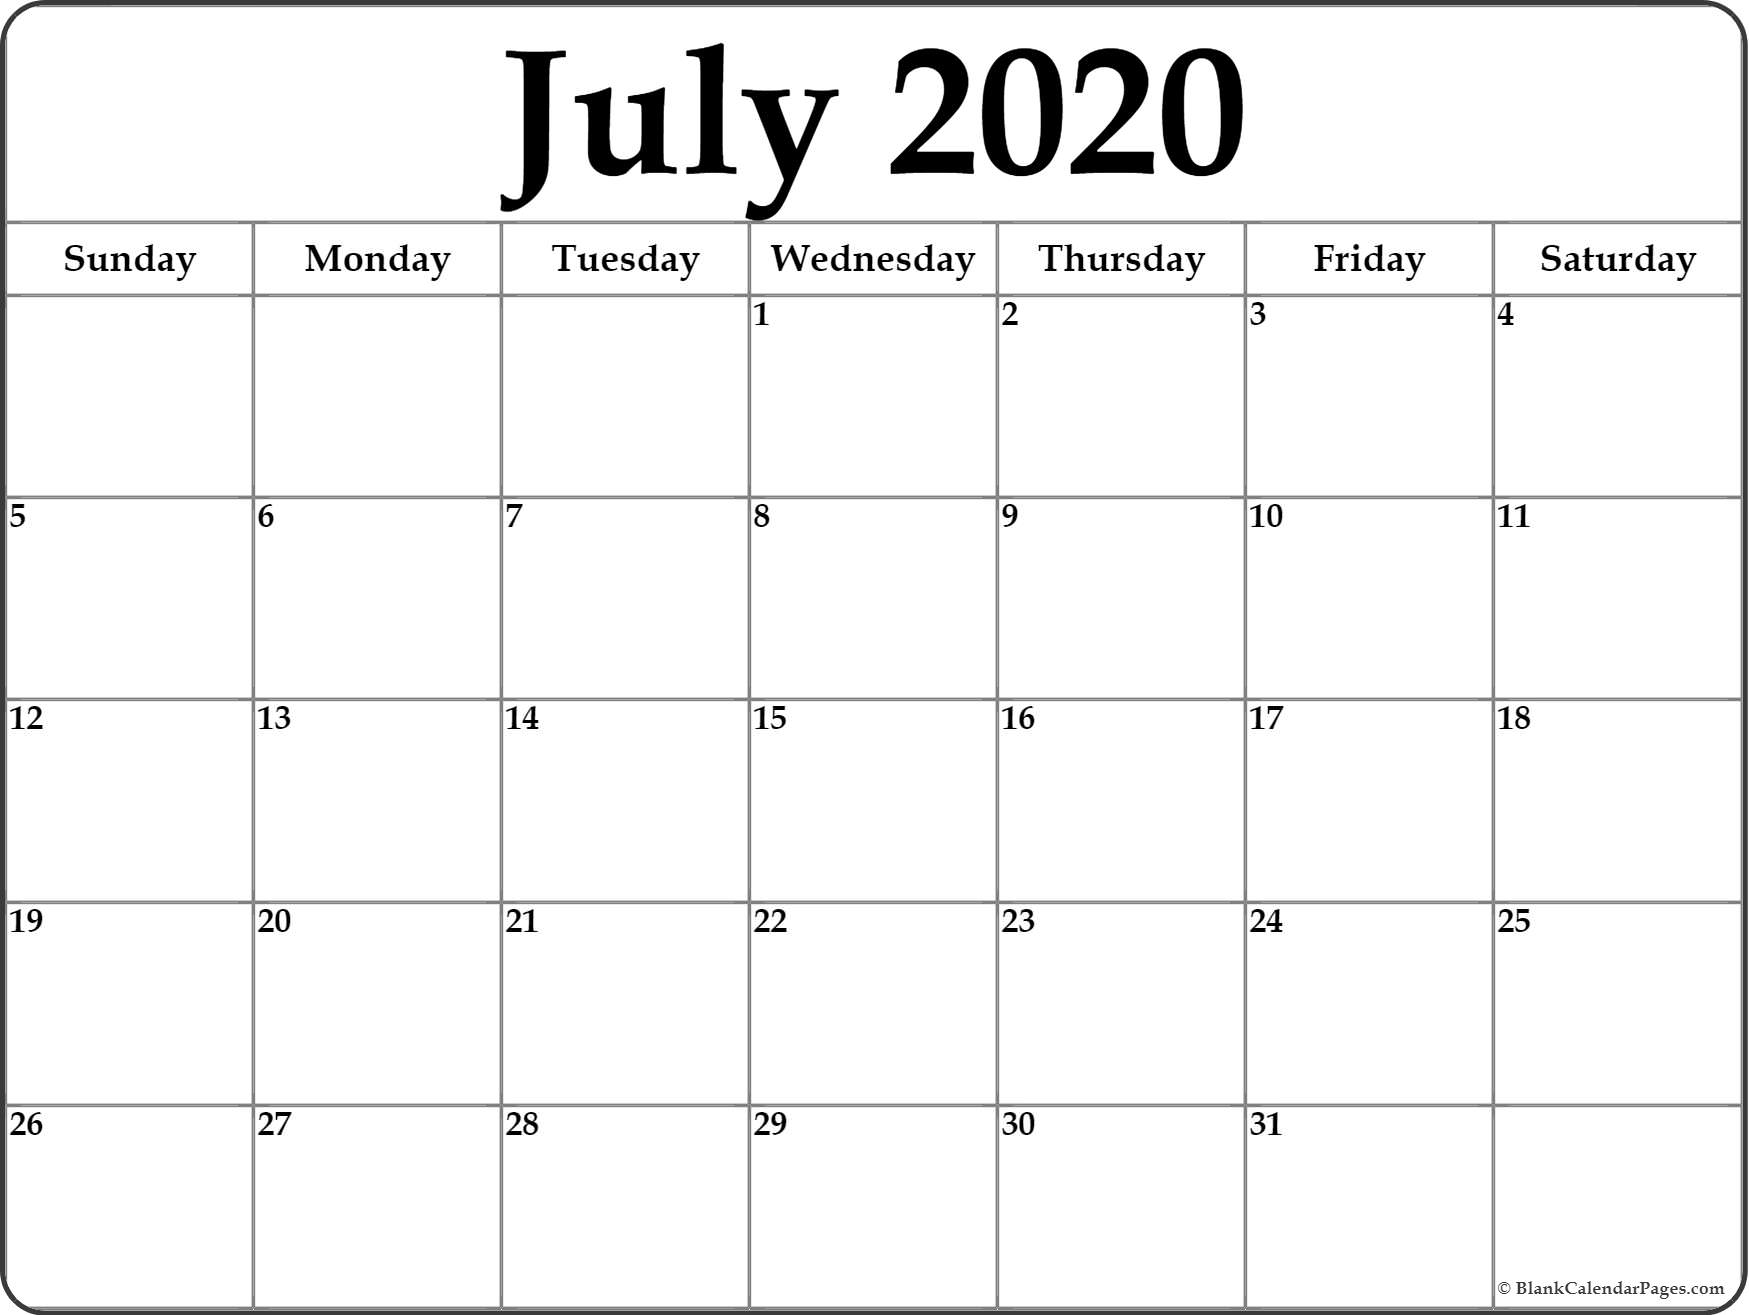 July 2020 Calendar | Free Printable Monthly Calendars pertaining to 2020 Free Monthly Calendars To Print